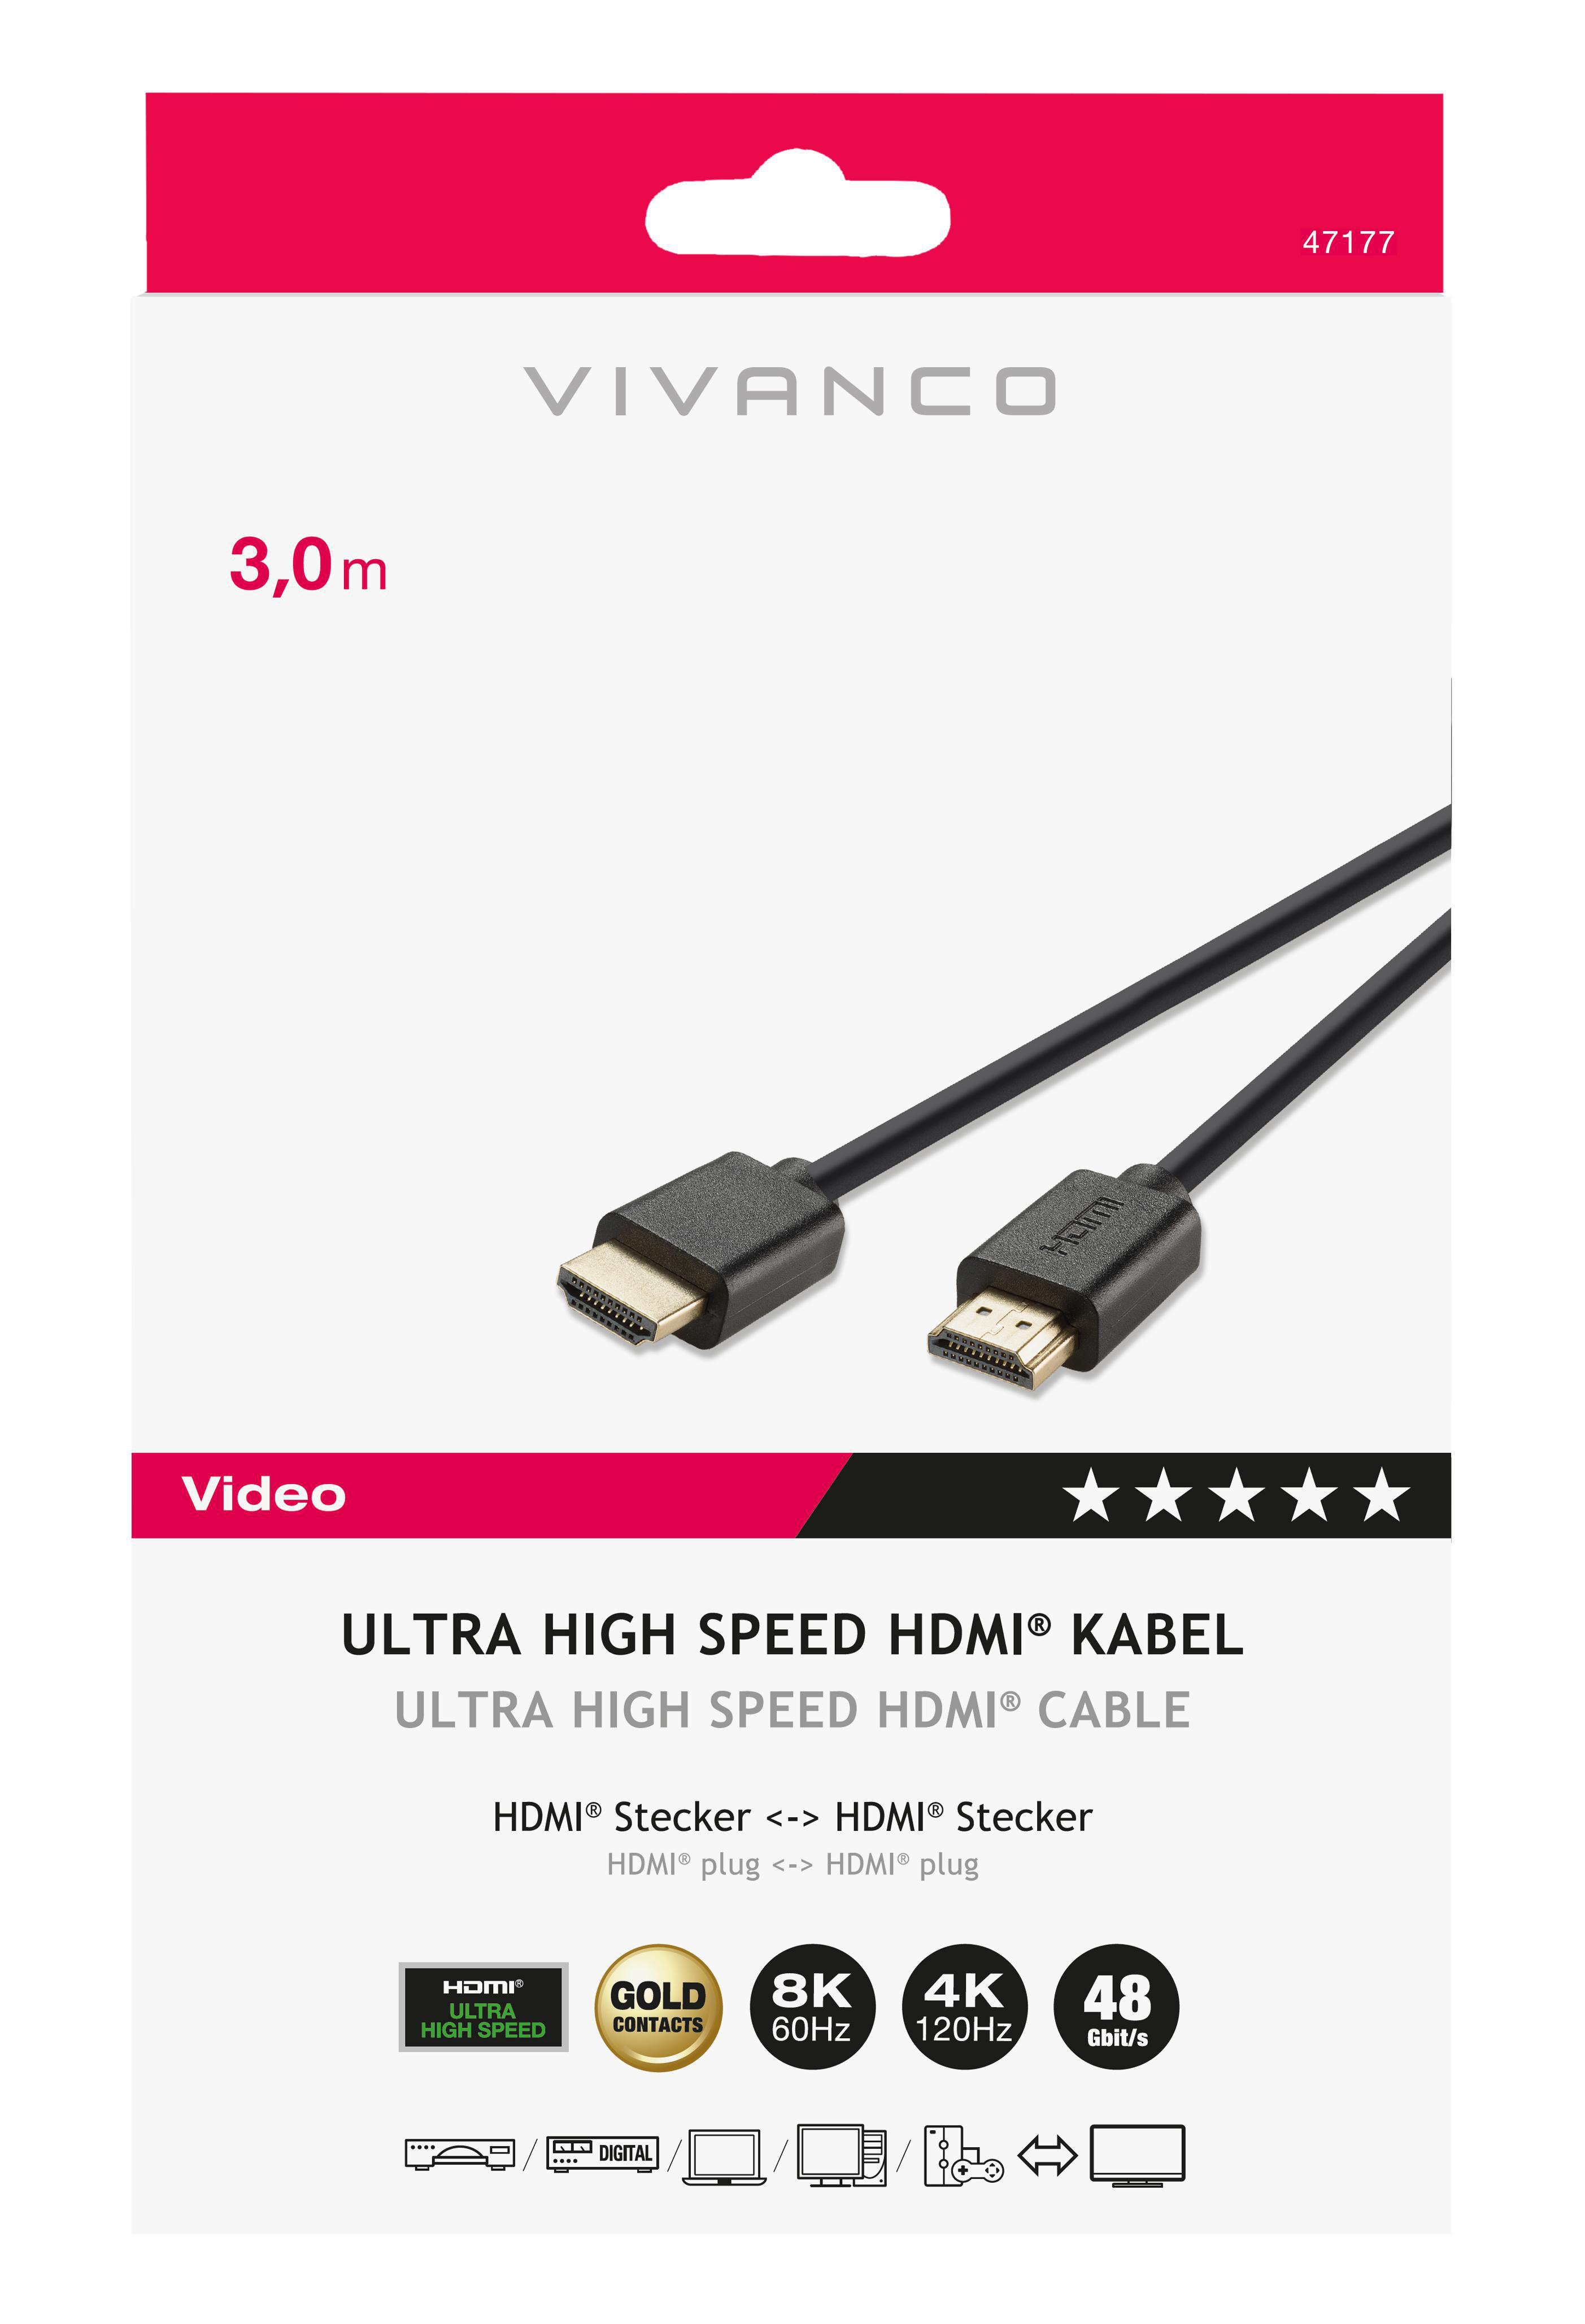 HDMI 3 m Kabel, VIVANCO 47177,